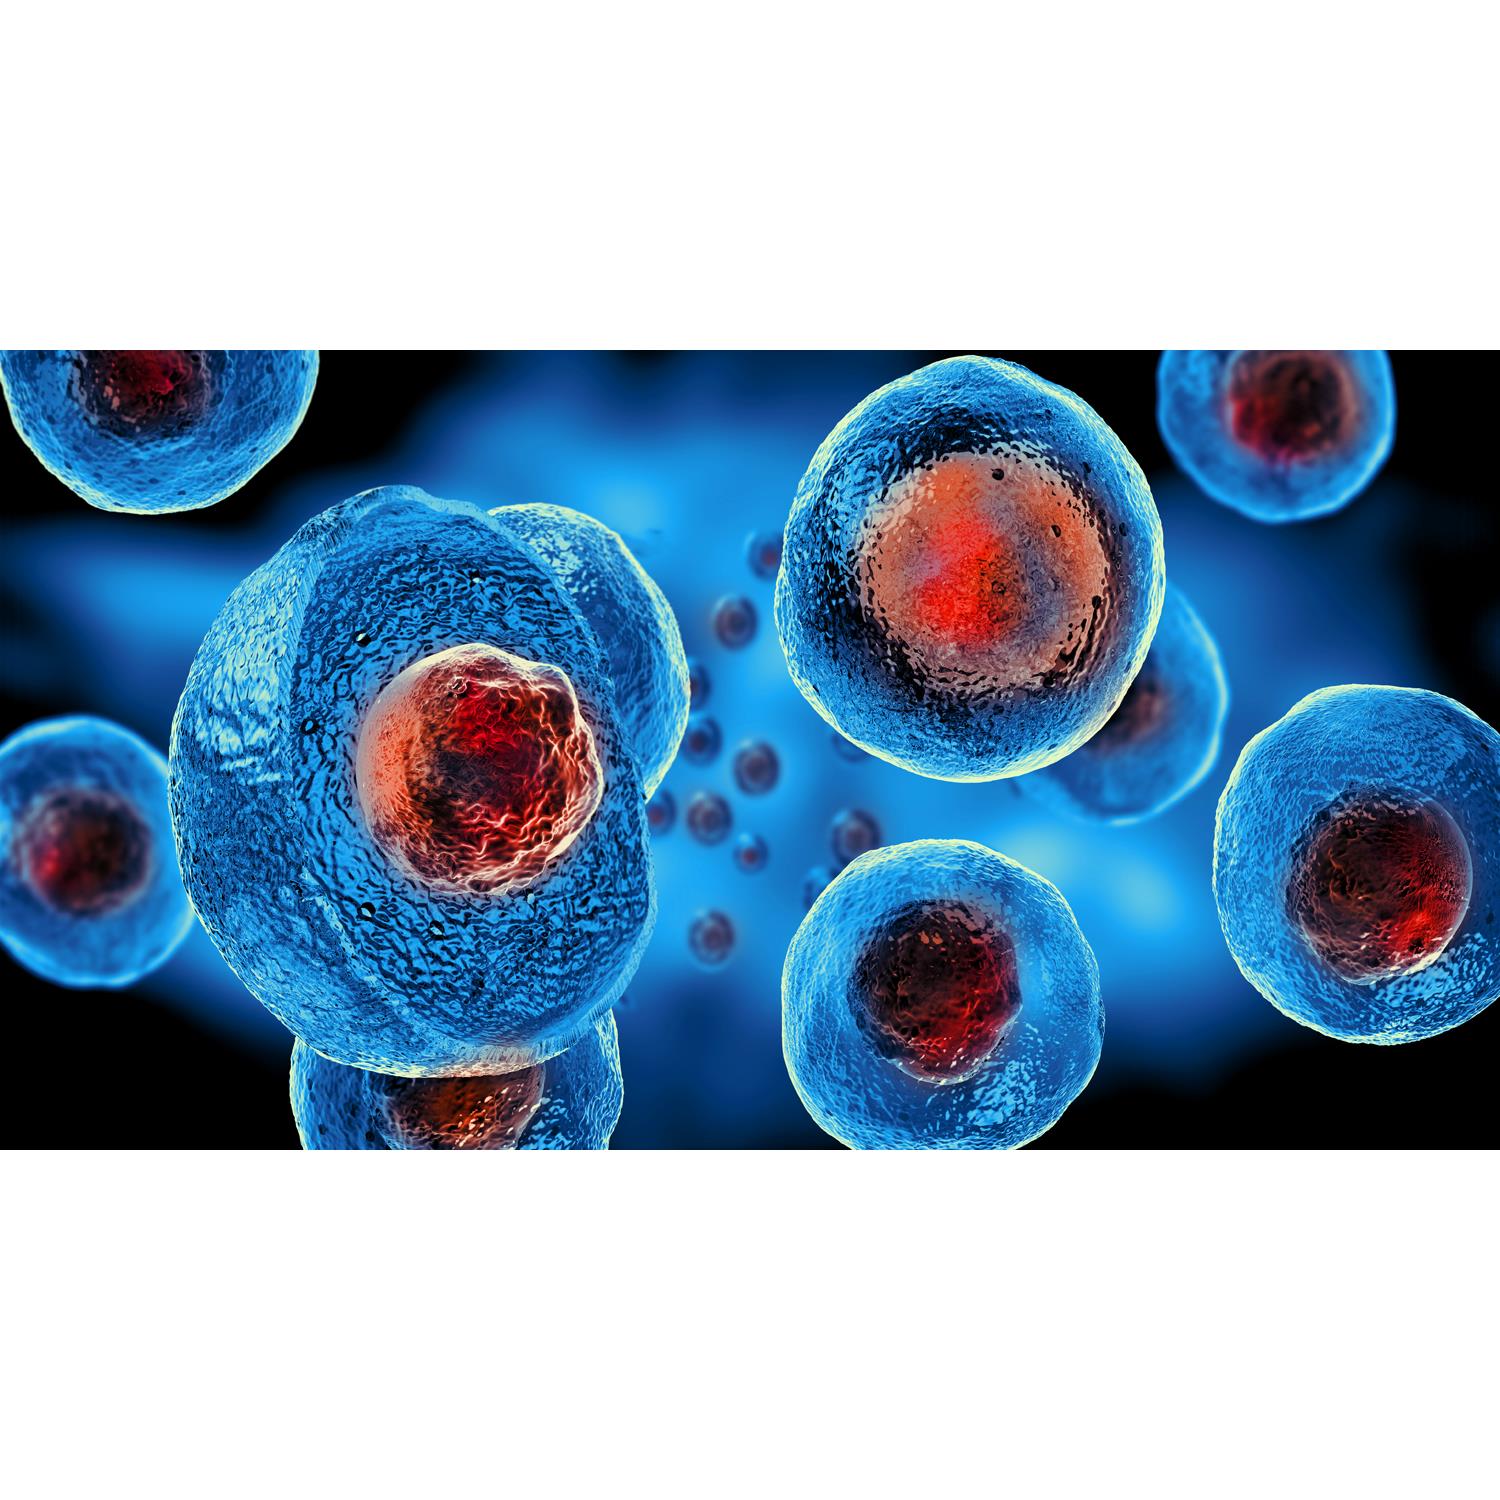 Medical Office Art - Embryonic stem cells